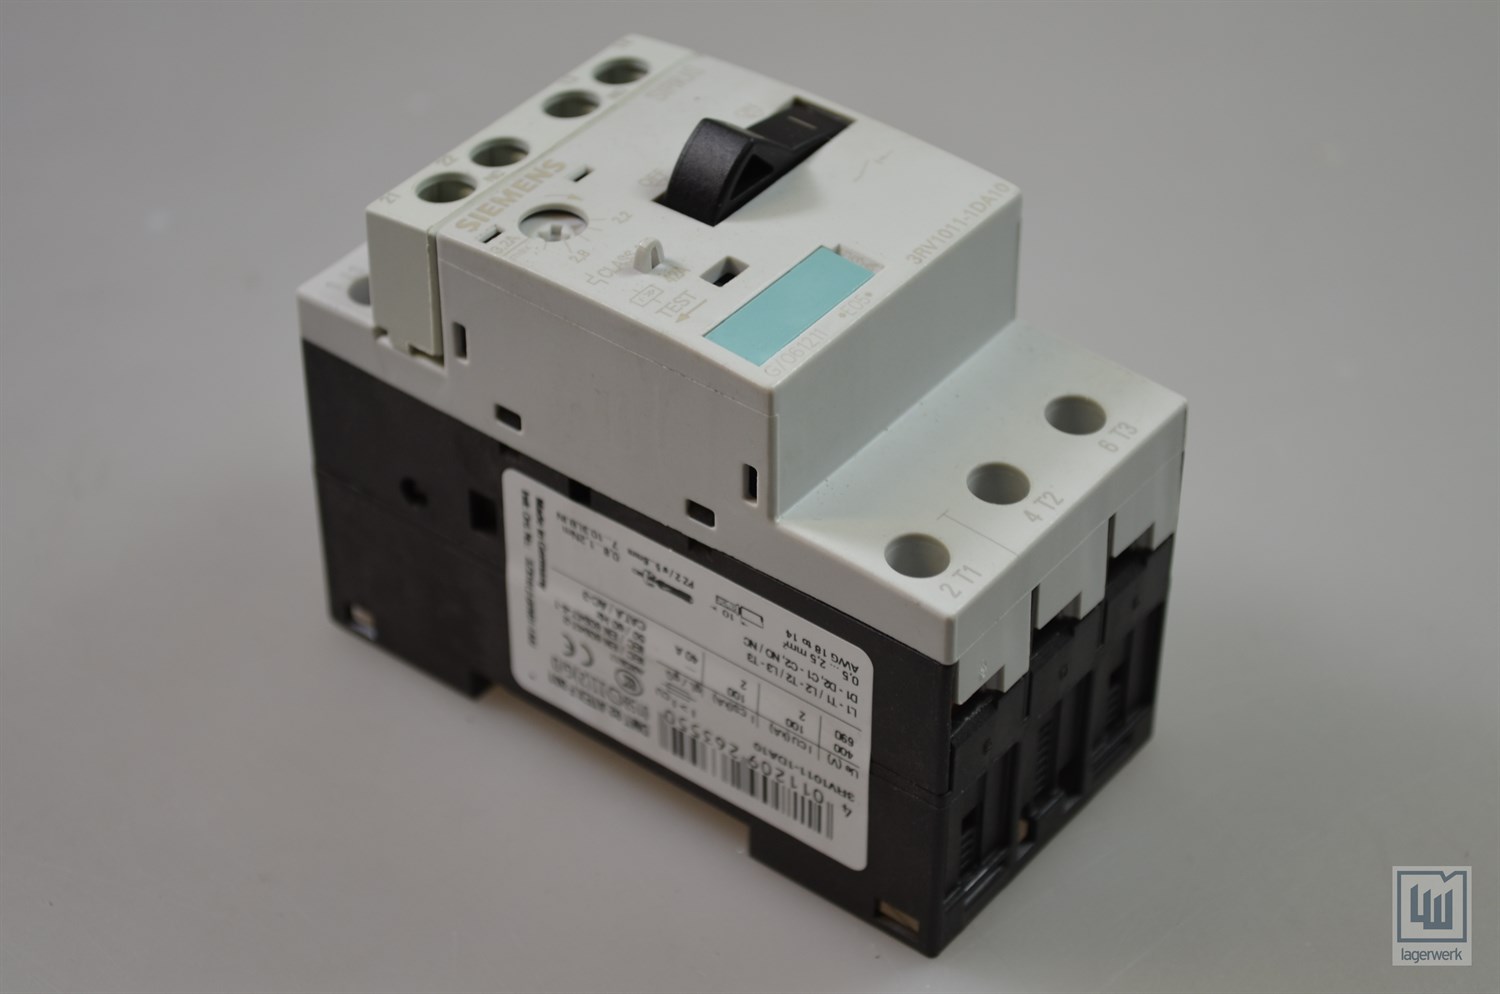 1PCS Siemens motor protection circuit breaker 3RV1011-1DA10 3RV10111DA10